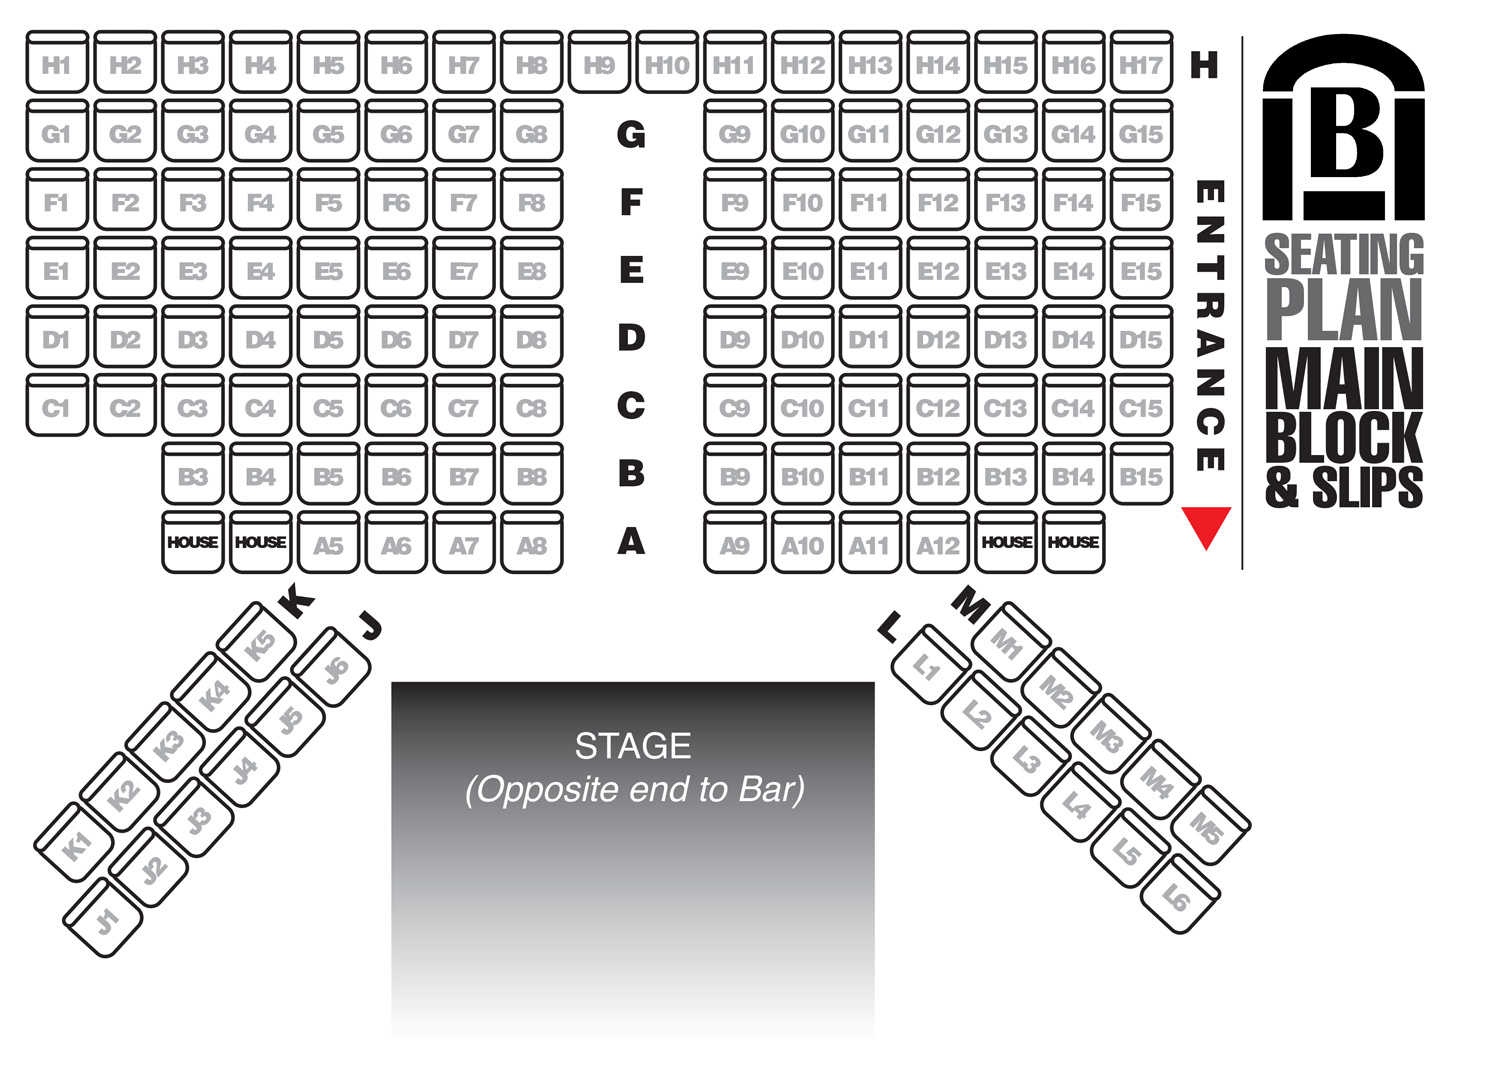 Seating-Plan-Main-Block-NEW-with-slips.jpg